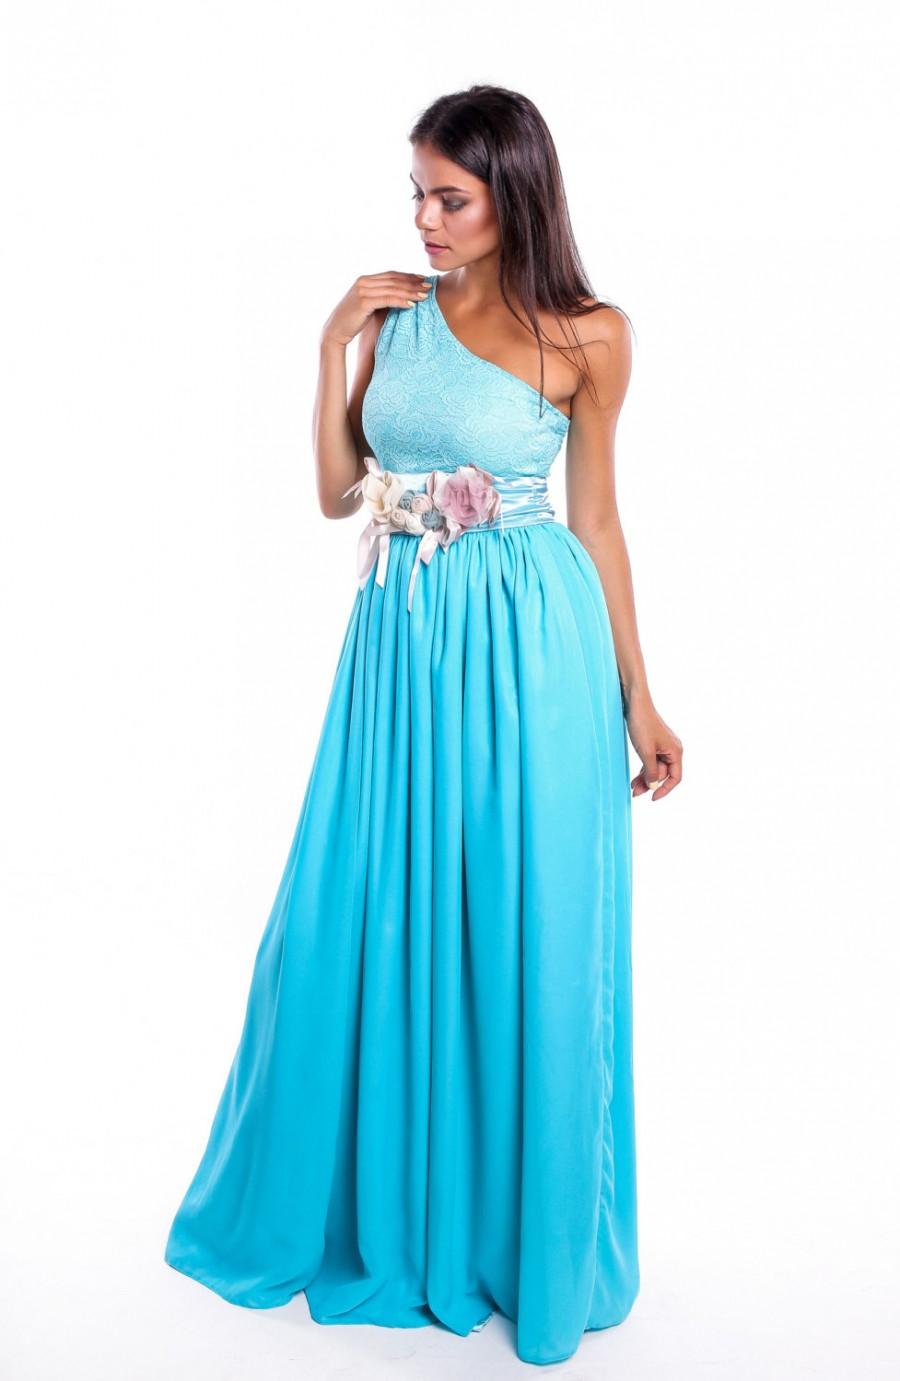 زفاف - New 2016 Blue Bridesmaid dress Long.Evening One Shoulder Lace Chiffon Dress With Flowers,Chiffon Bridesmaid Prom Dresses 2016